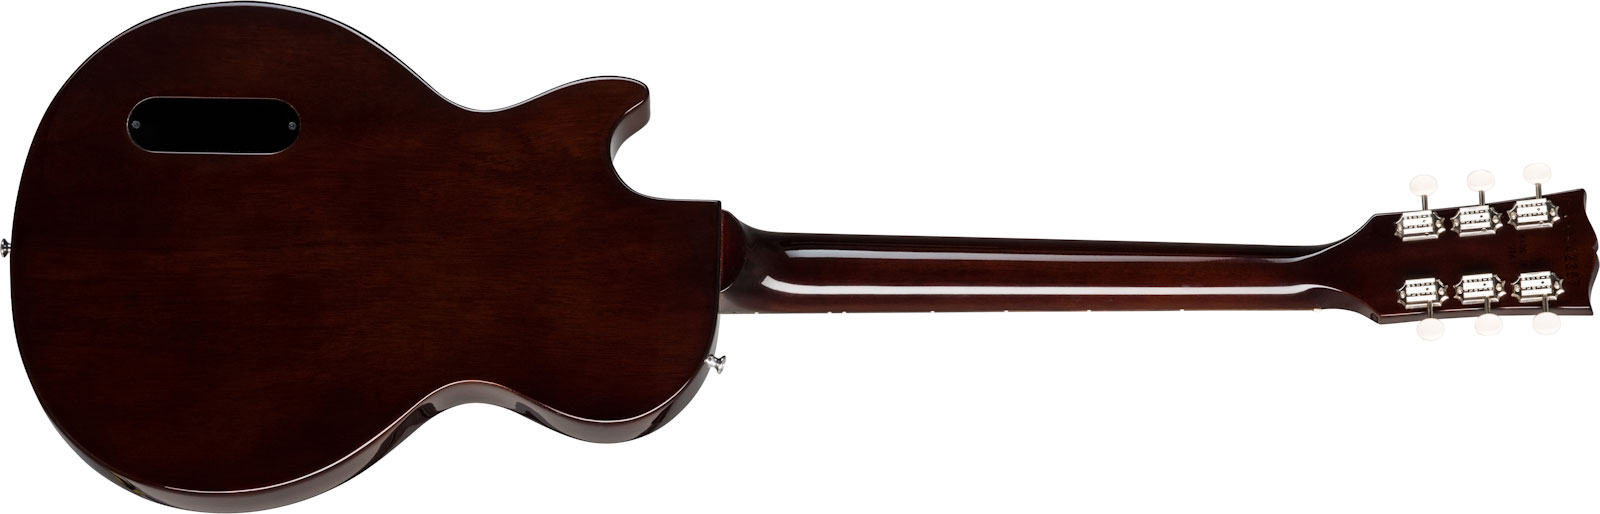 Gibson Les Paul Special Lh Original Gaucher 2p90 Ht Rw - Vintage Tobacco Burst - Guitarra electrica para zurdos - Variation 1